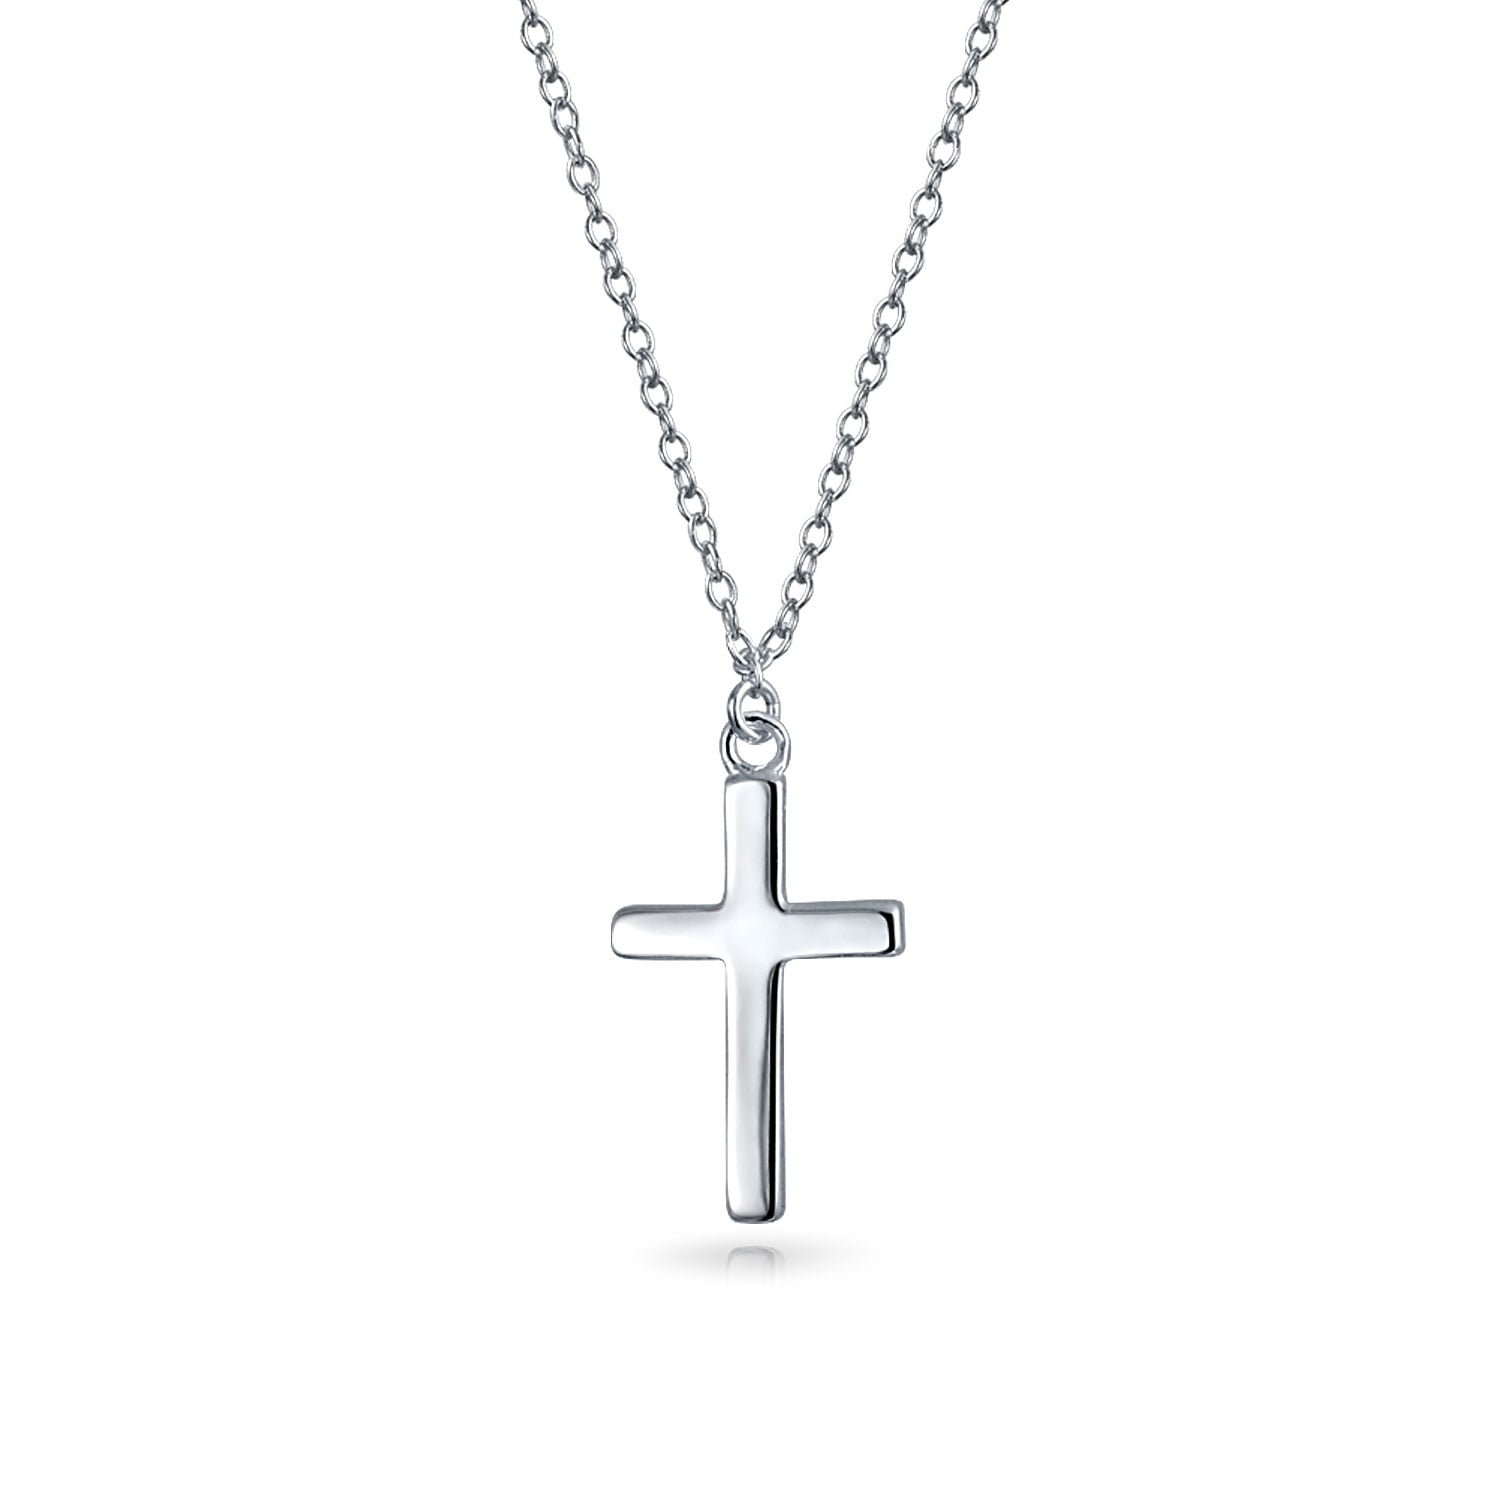 Aylifu 40pcs Round Enamel Cross Charms Alloy Crucifix Charm Pendants for Jewelry Making Bracelet Necklace